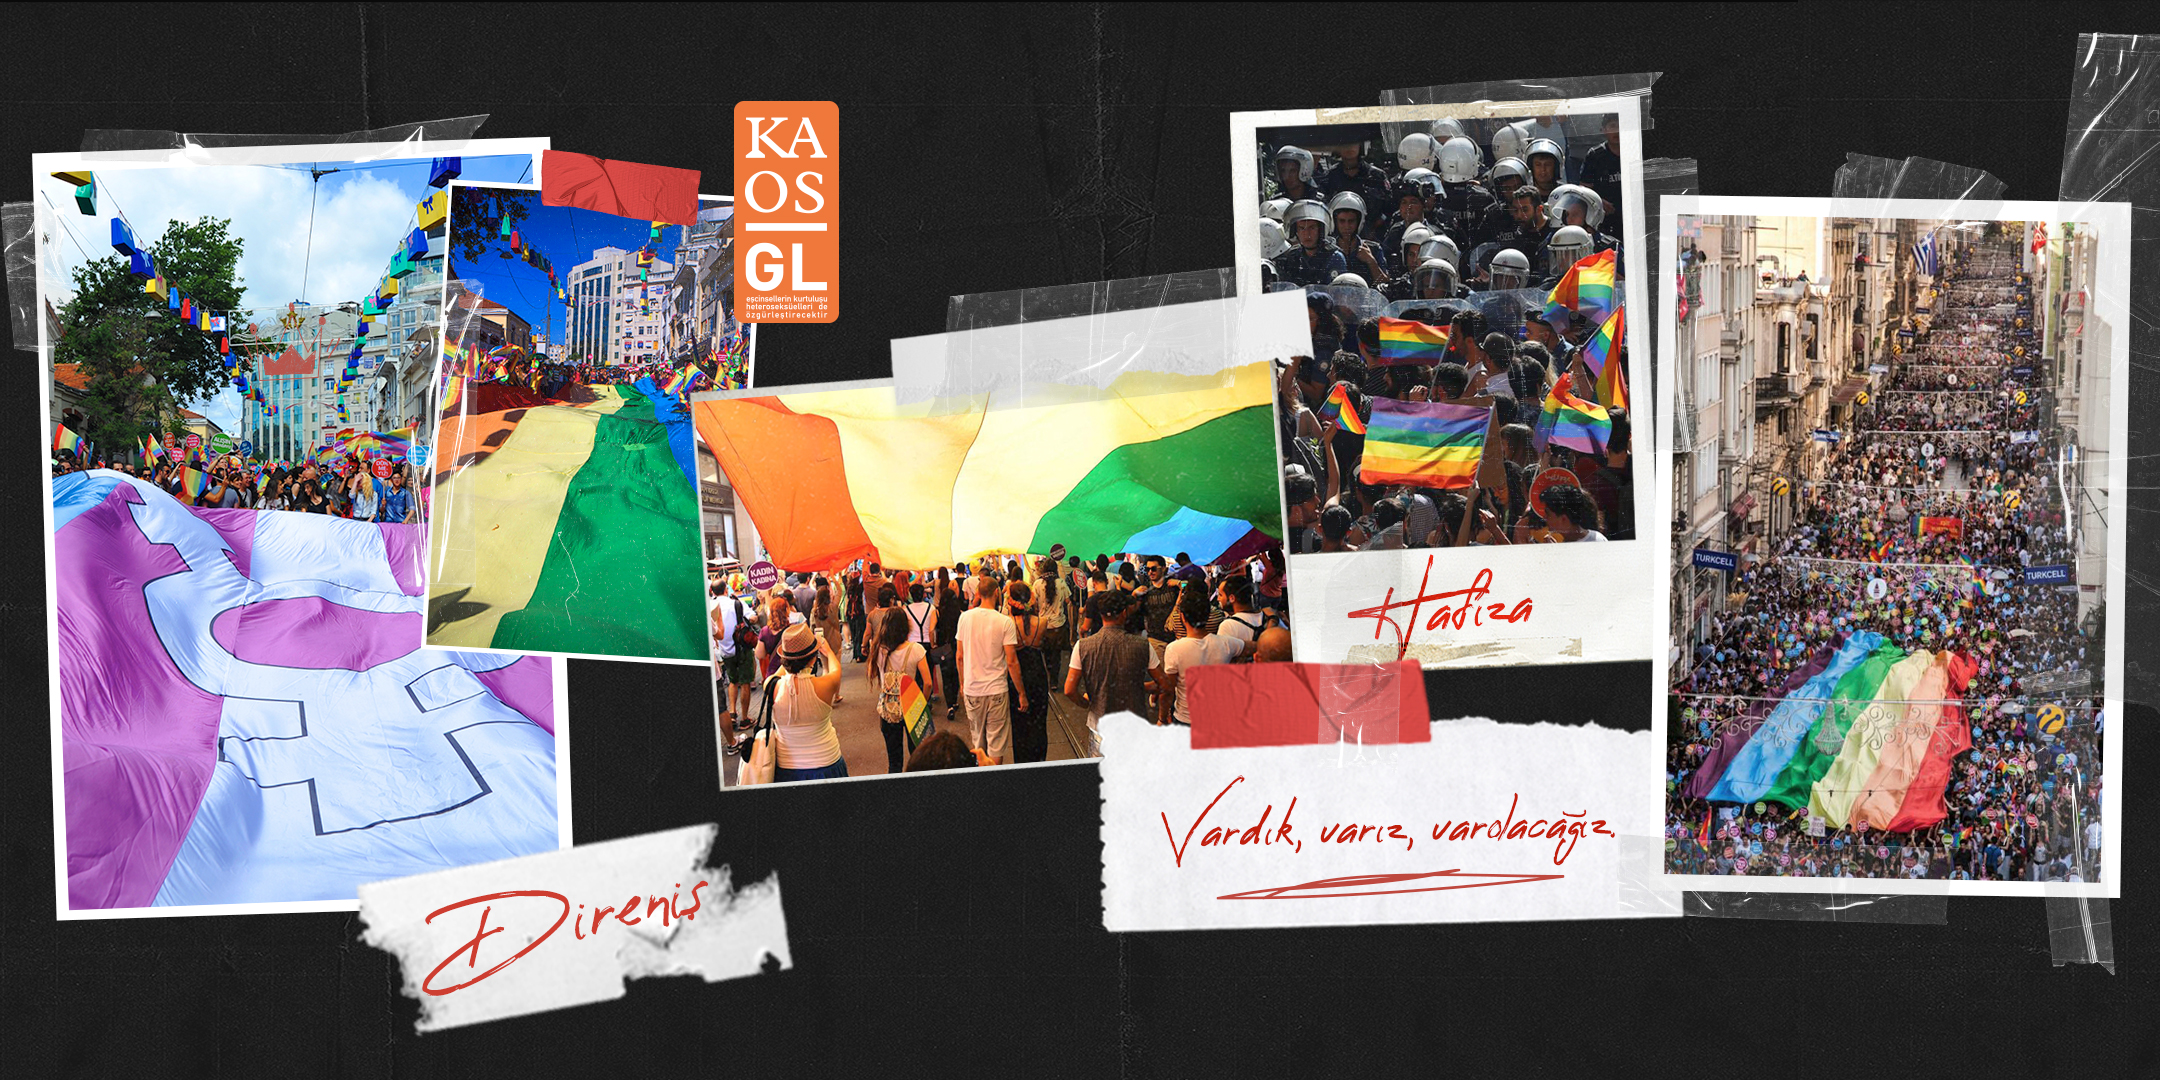 Direnişin hafızası, hafızanın direnişi Kaos GL - LGBTİ+ Haber Portalı